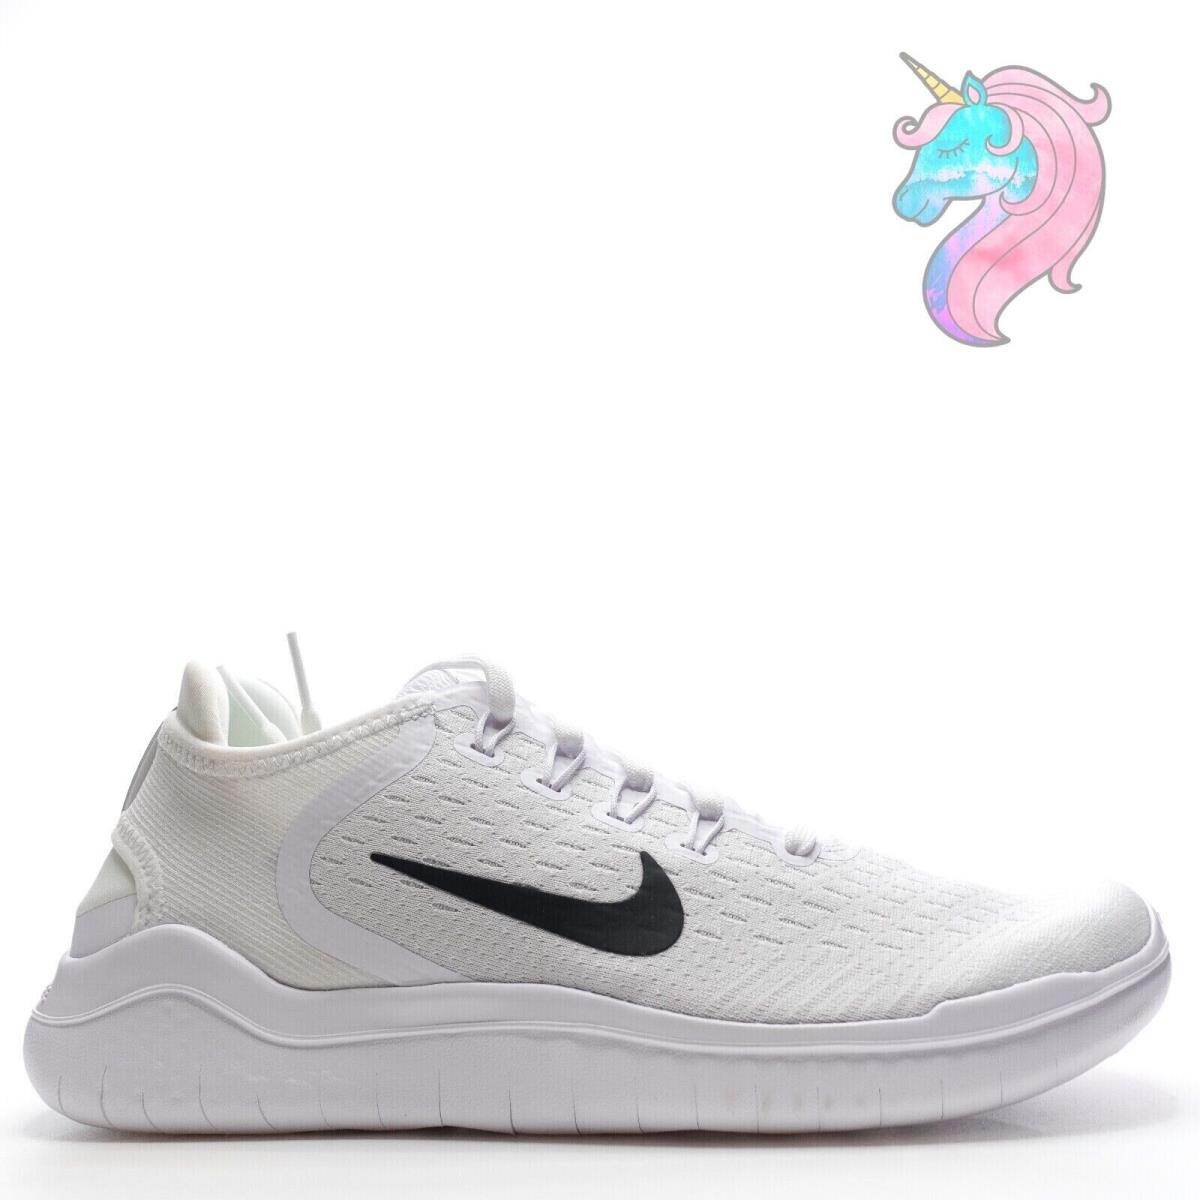 Nike Free RN 2018 White Black Lightweight Running Shoes 942837-100 Womens Sizes